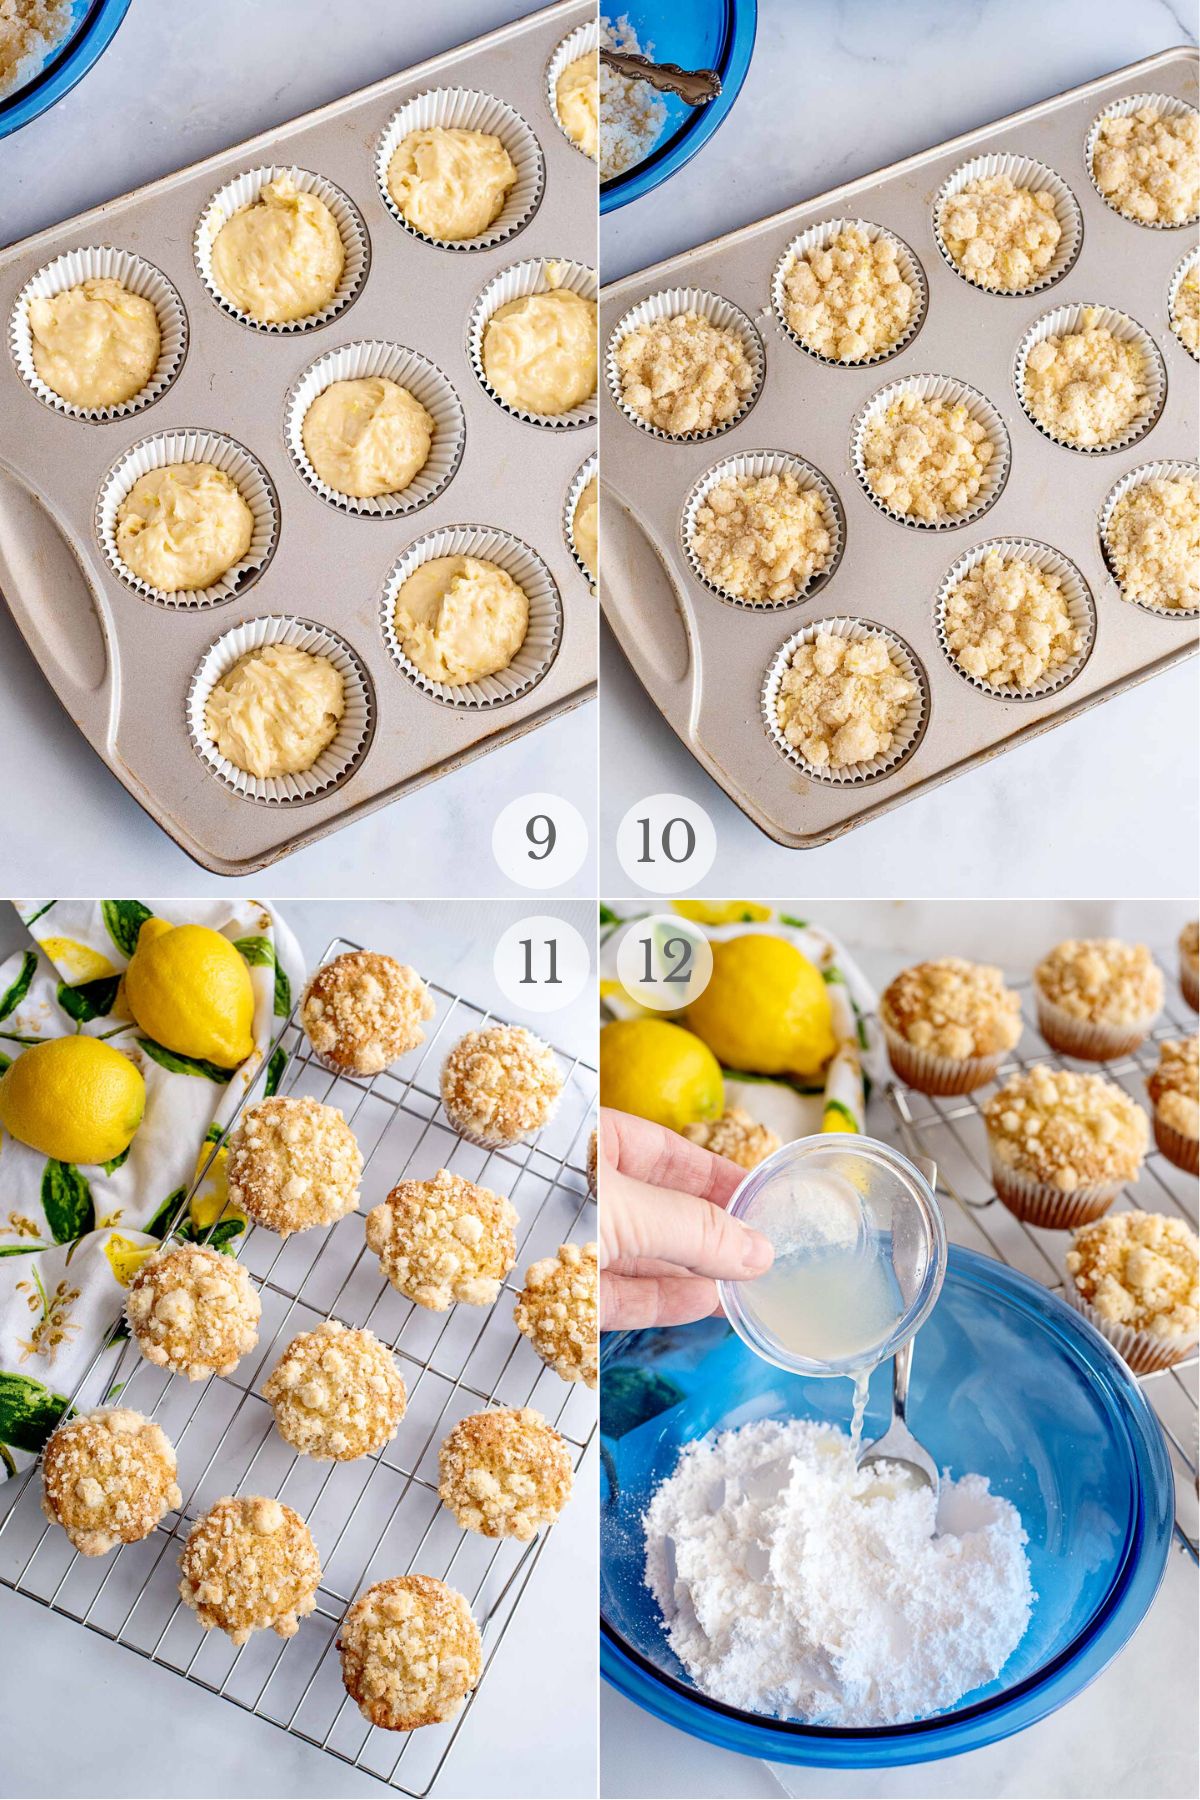 lemon muffins recipe steps 9-12.